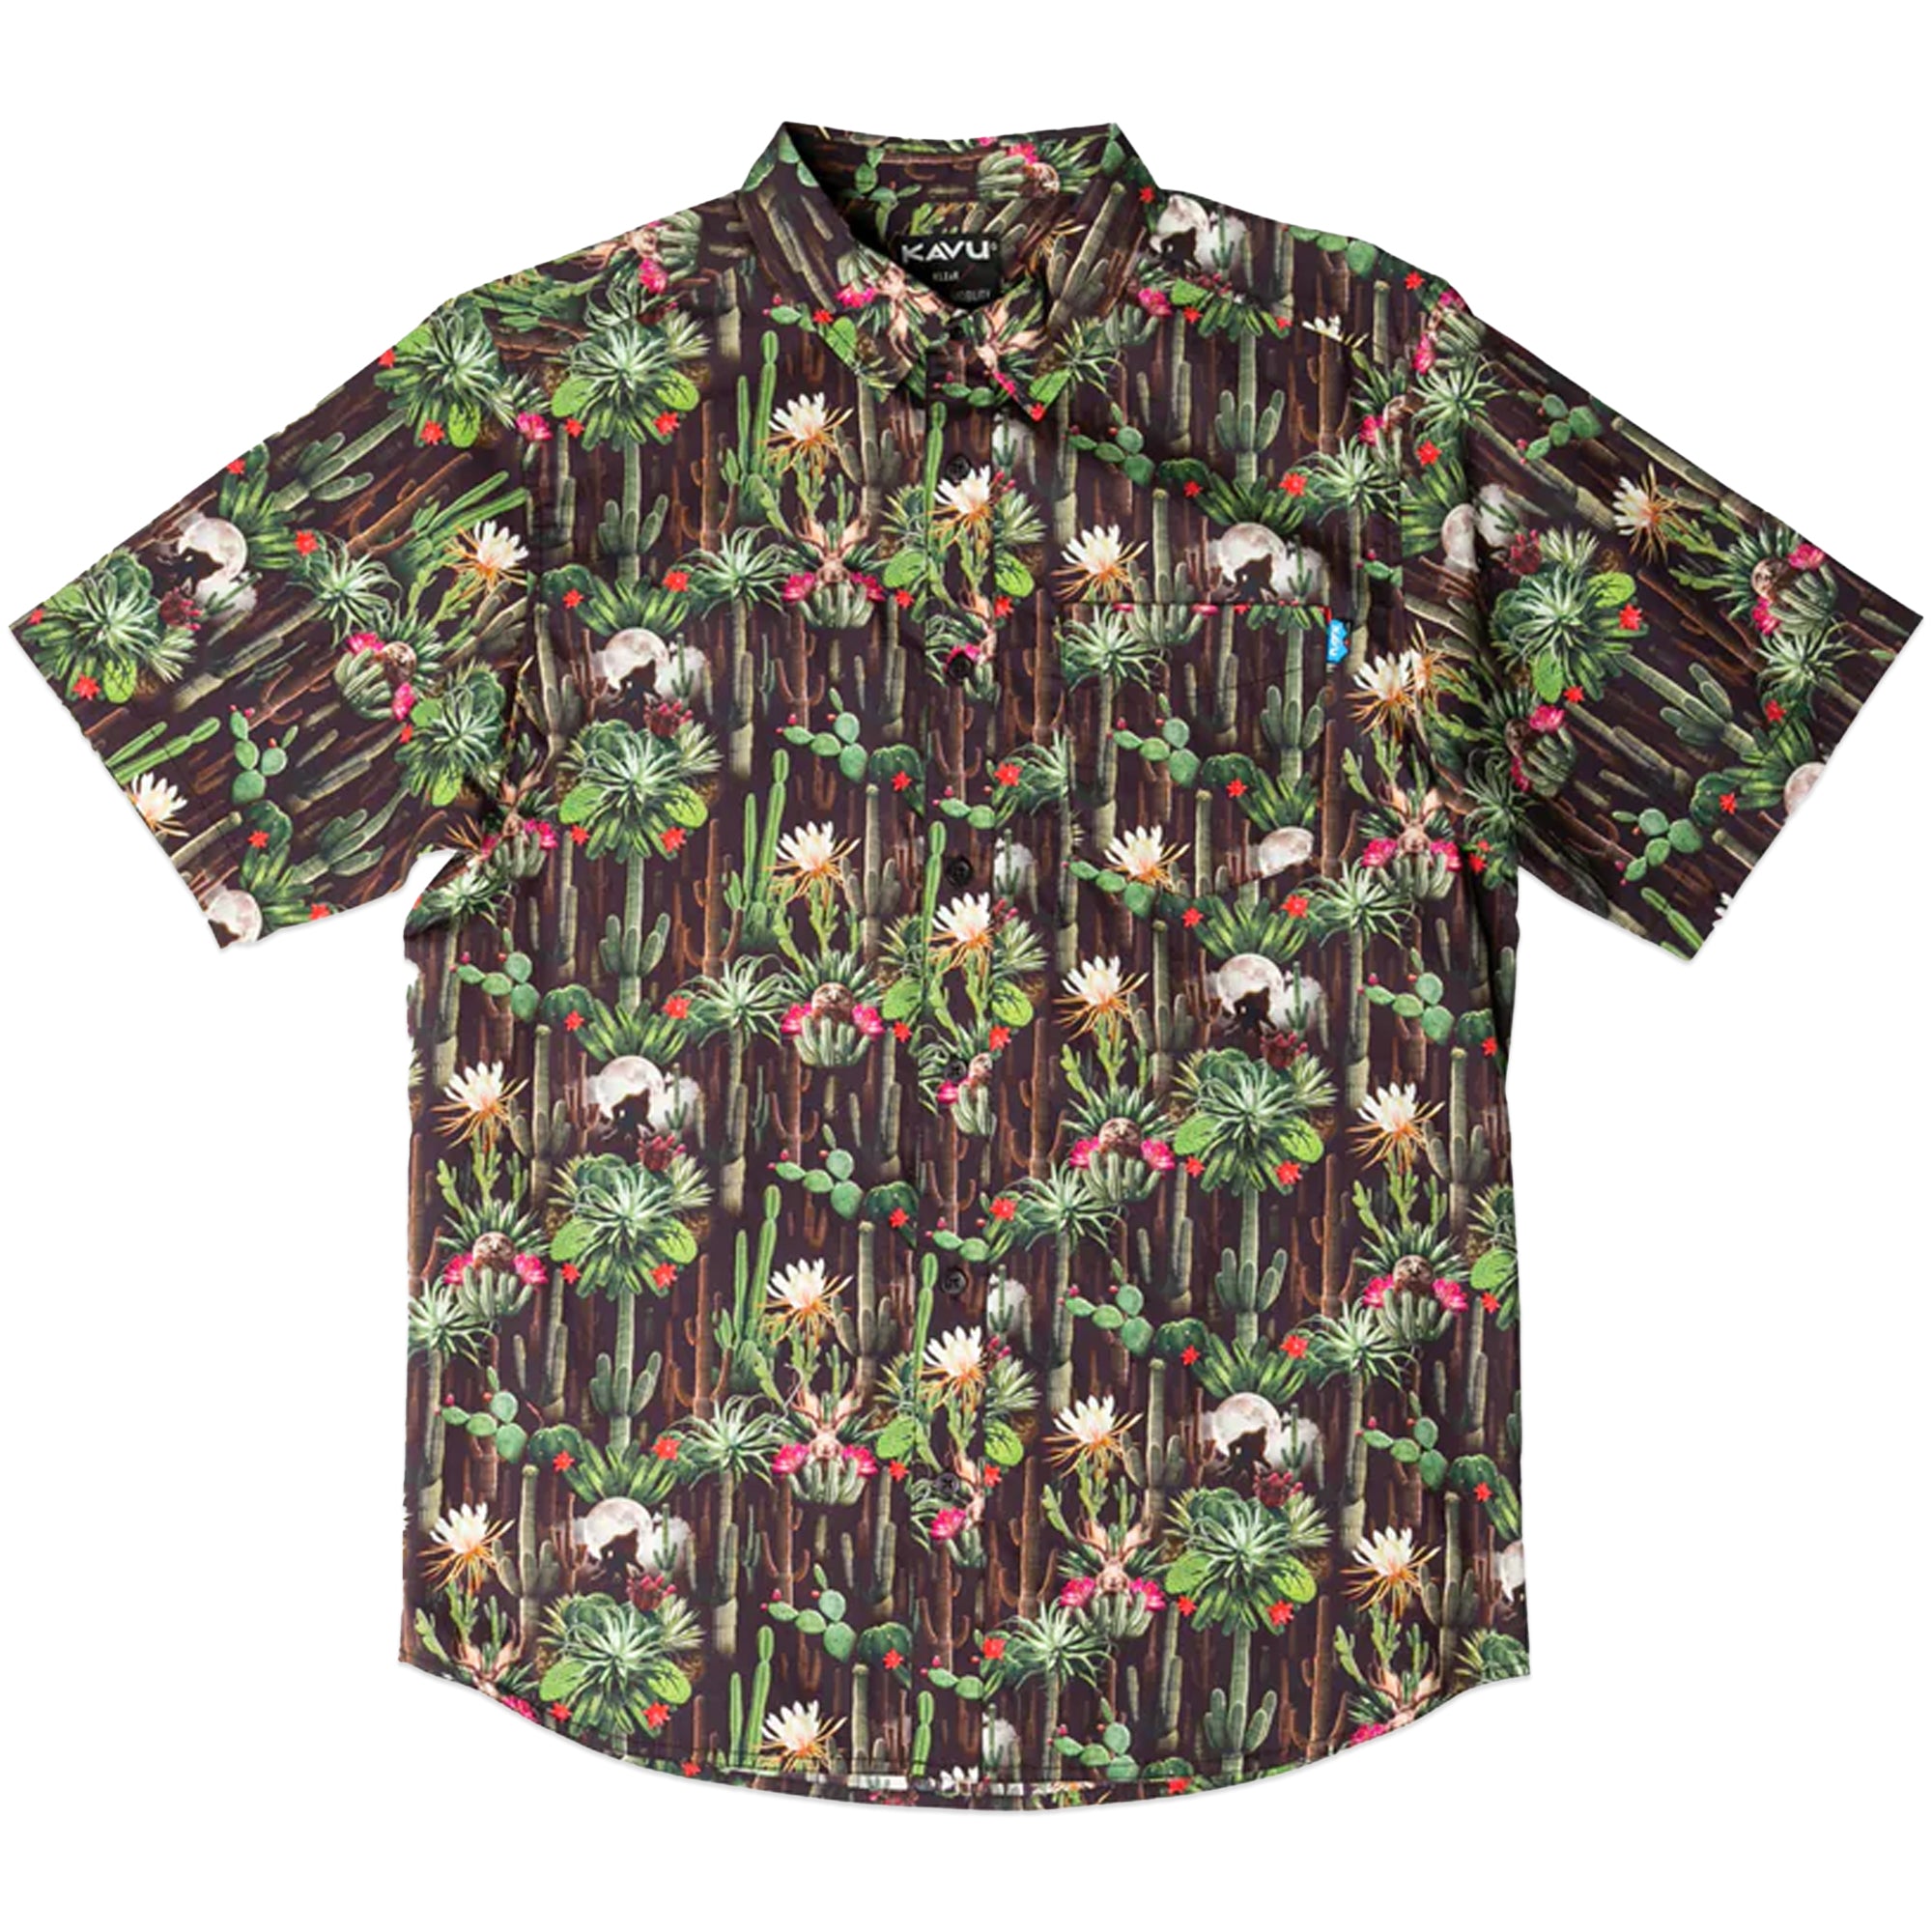 KAVU The Jam SS Shirt - Cactus Forest